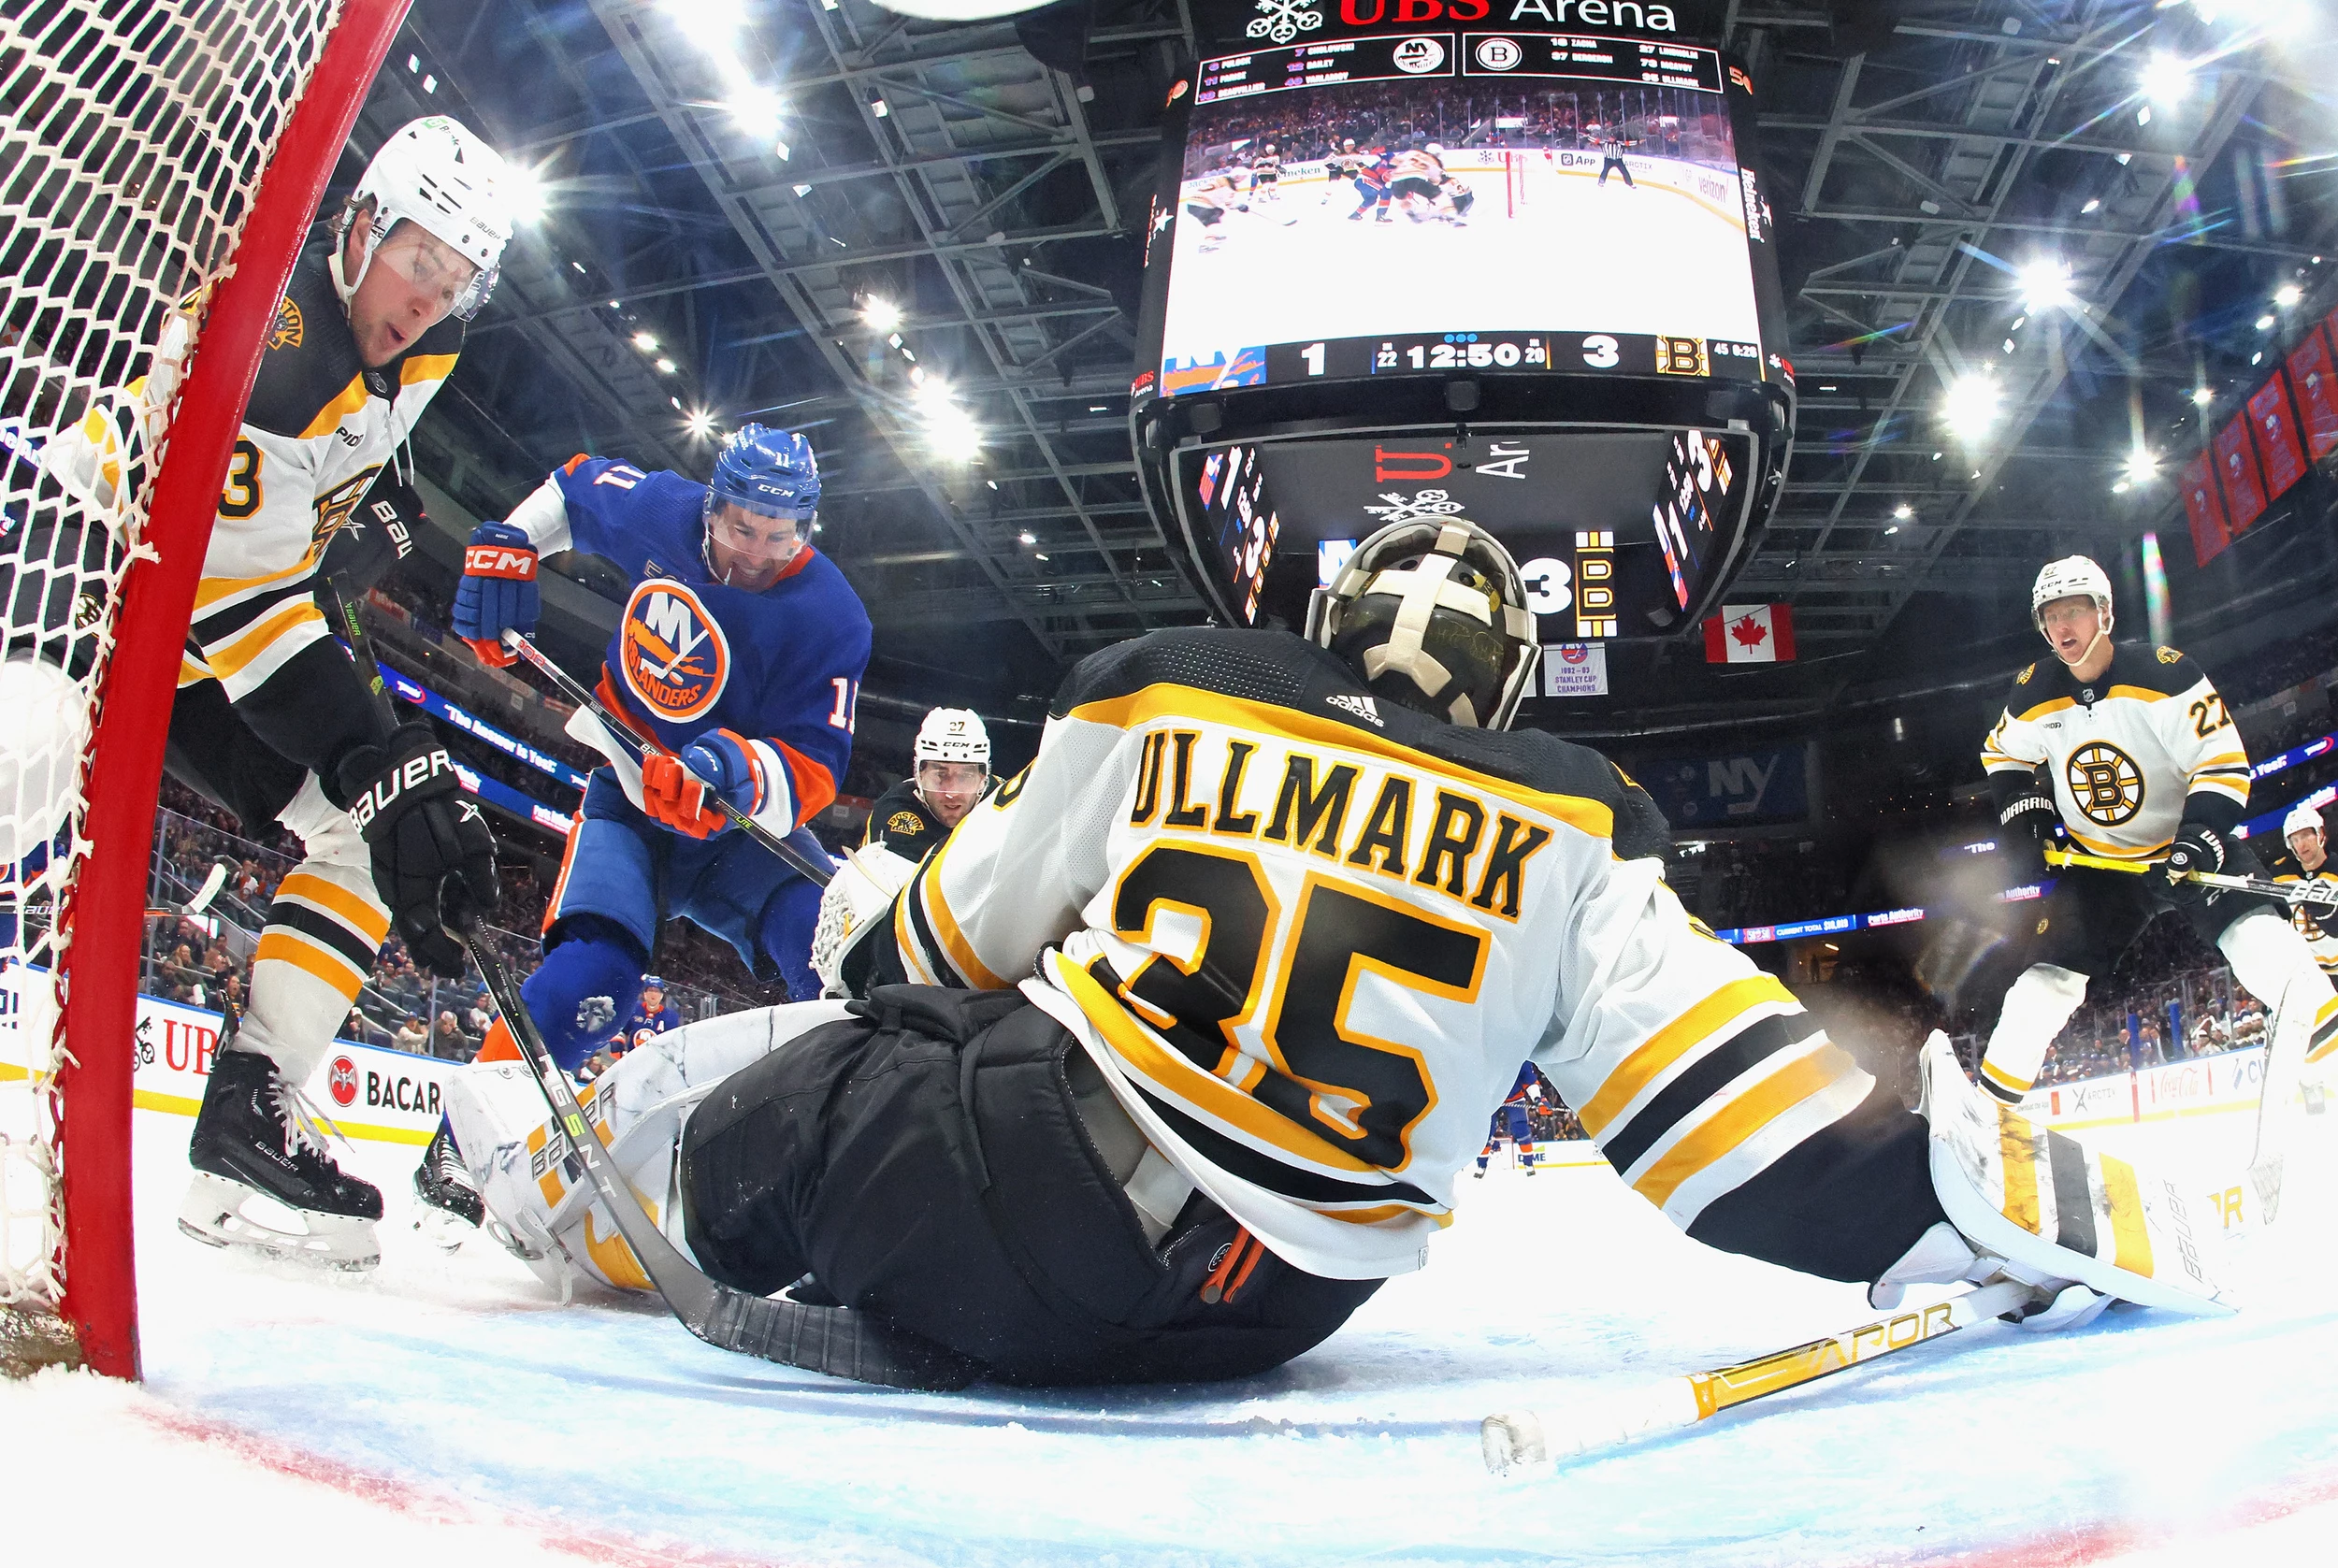 Clutterbuck, Varlamov lead Islanders to 3-1 win over Bruins